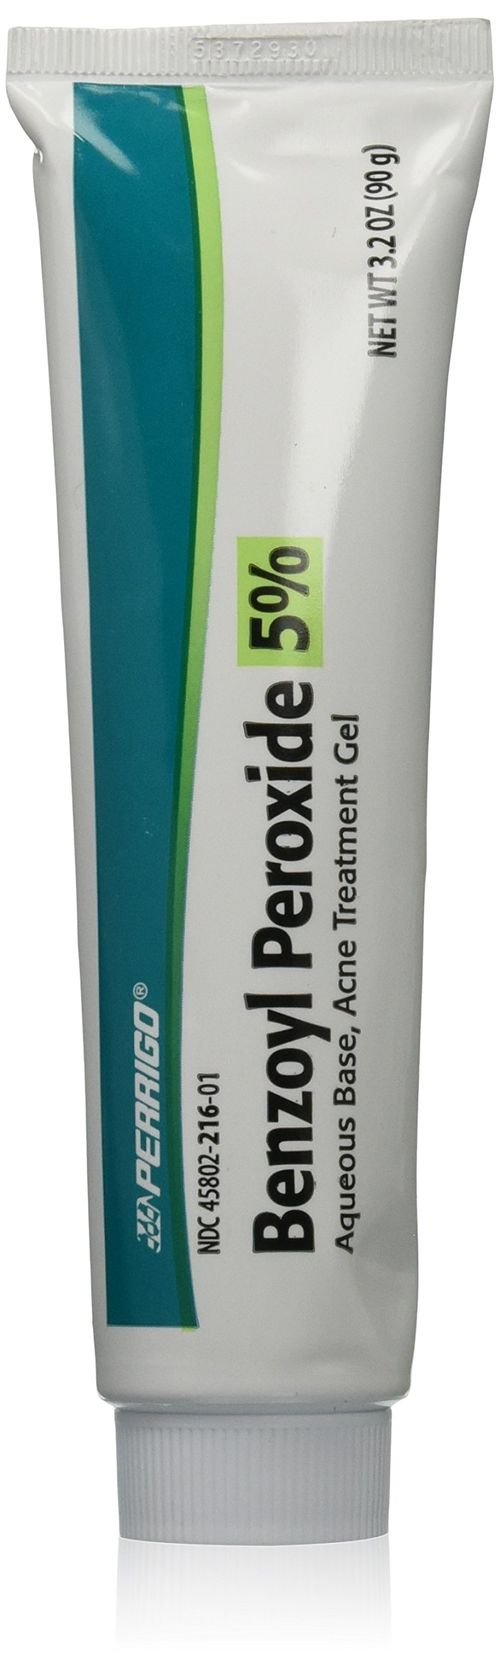 Perrigo Benzoyl Peroxide Gel